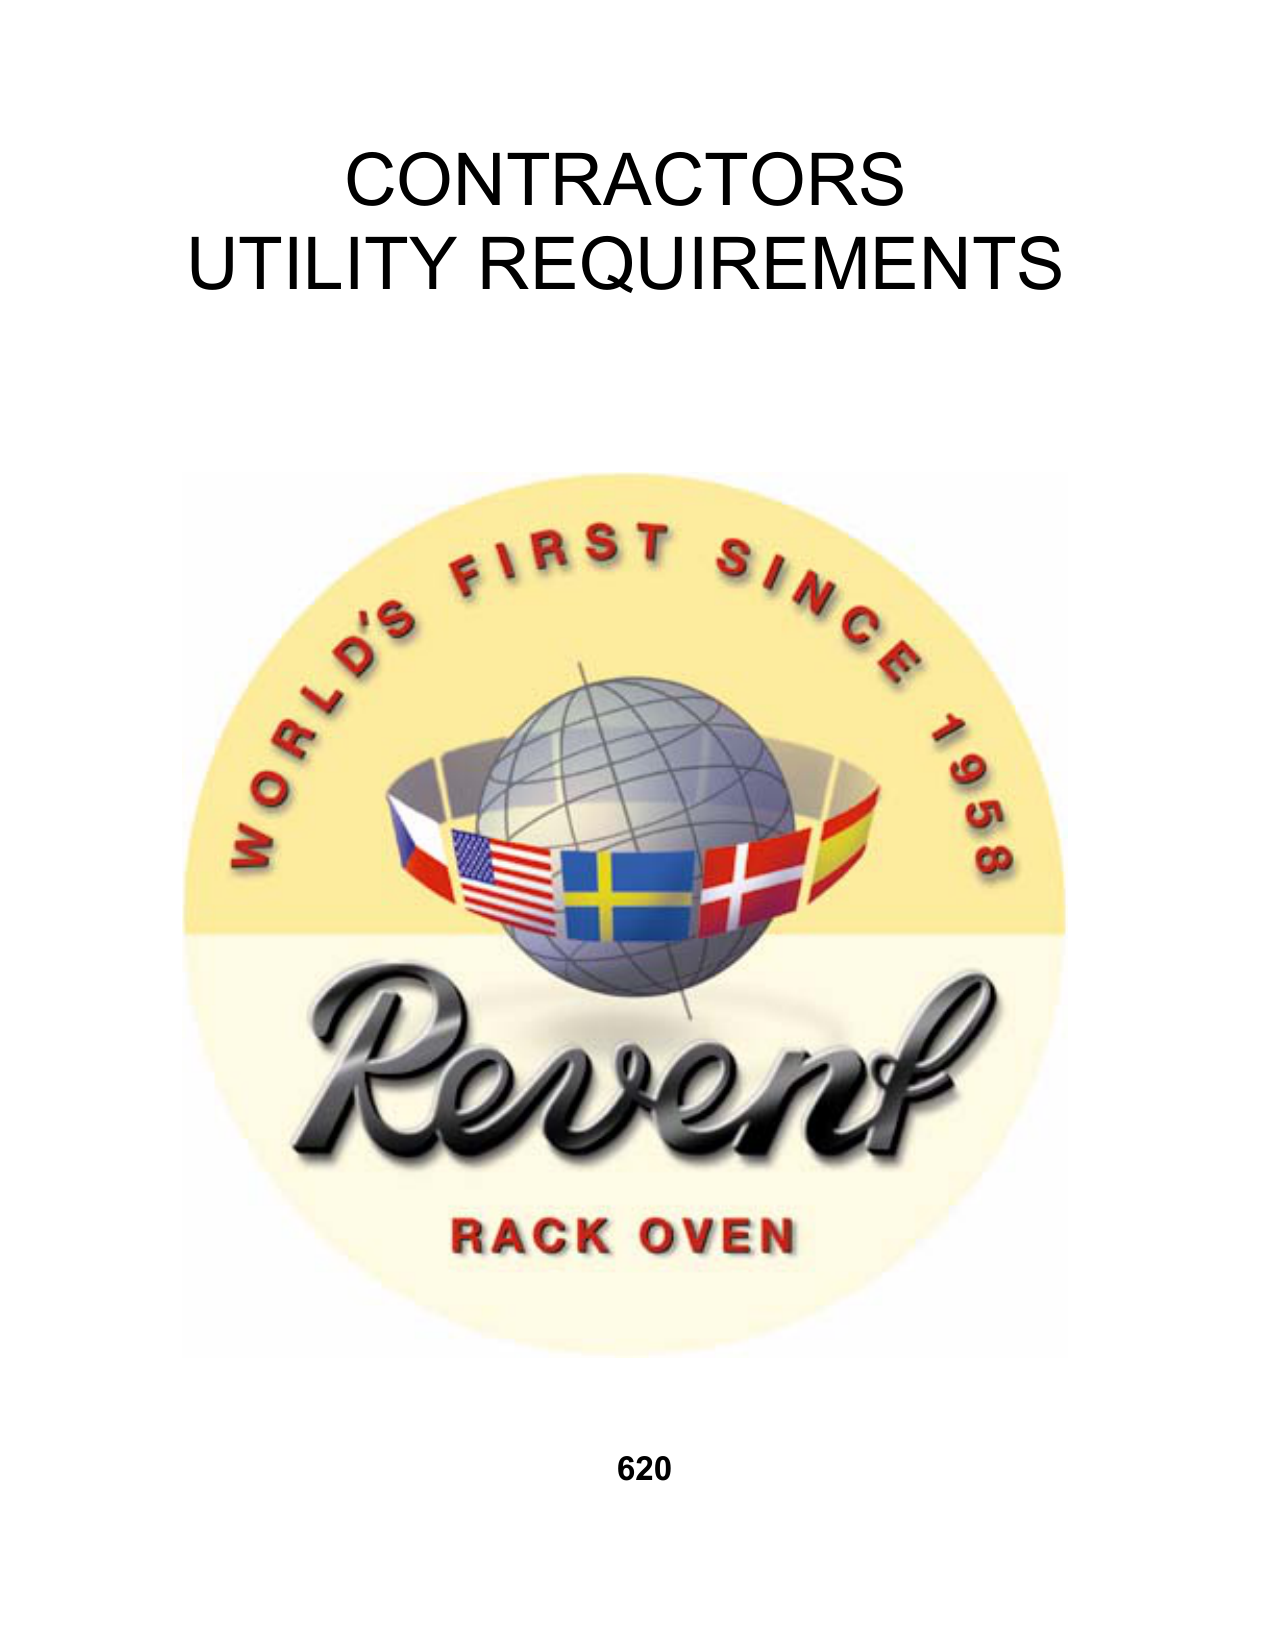 Revent 724 oven parts manual